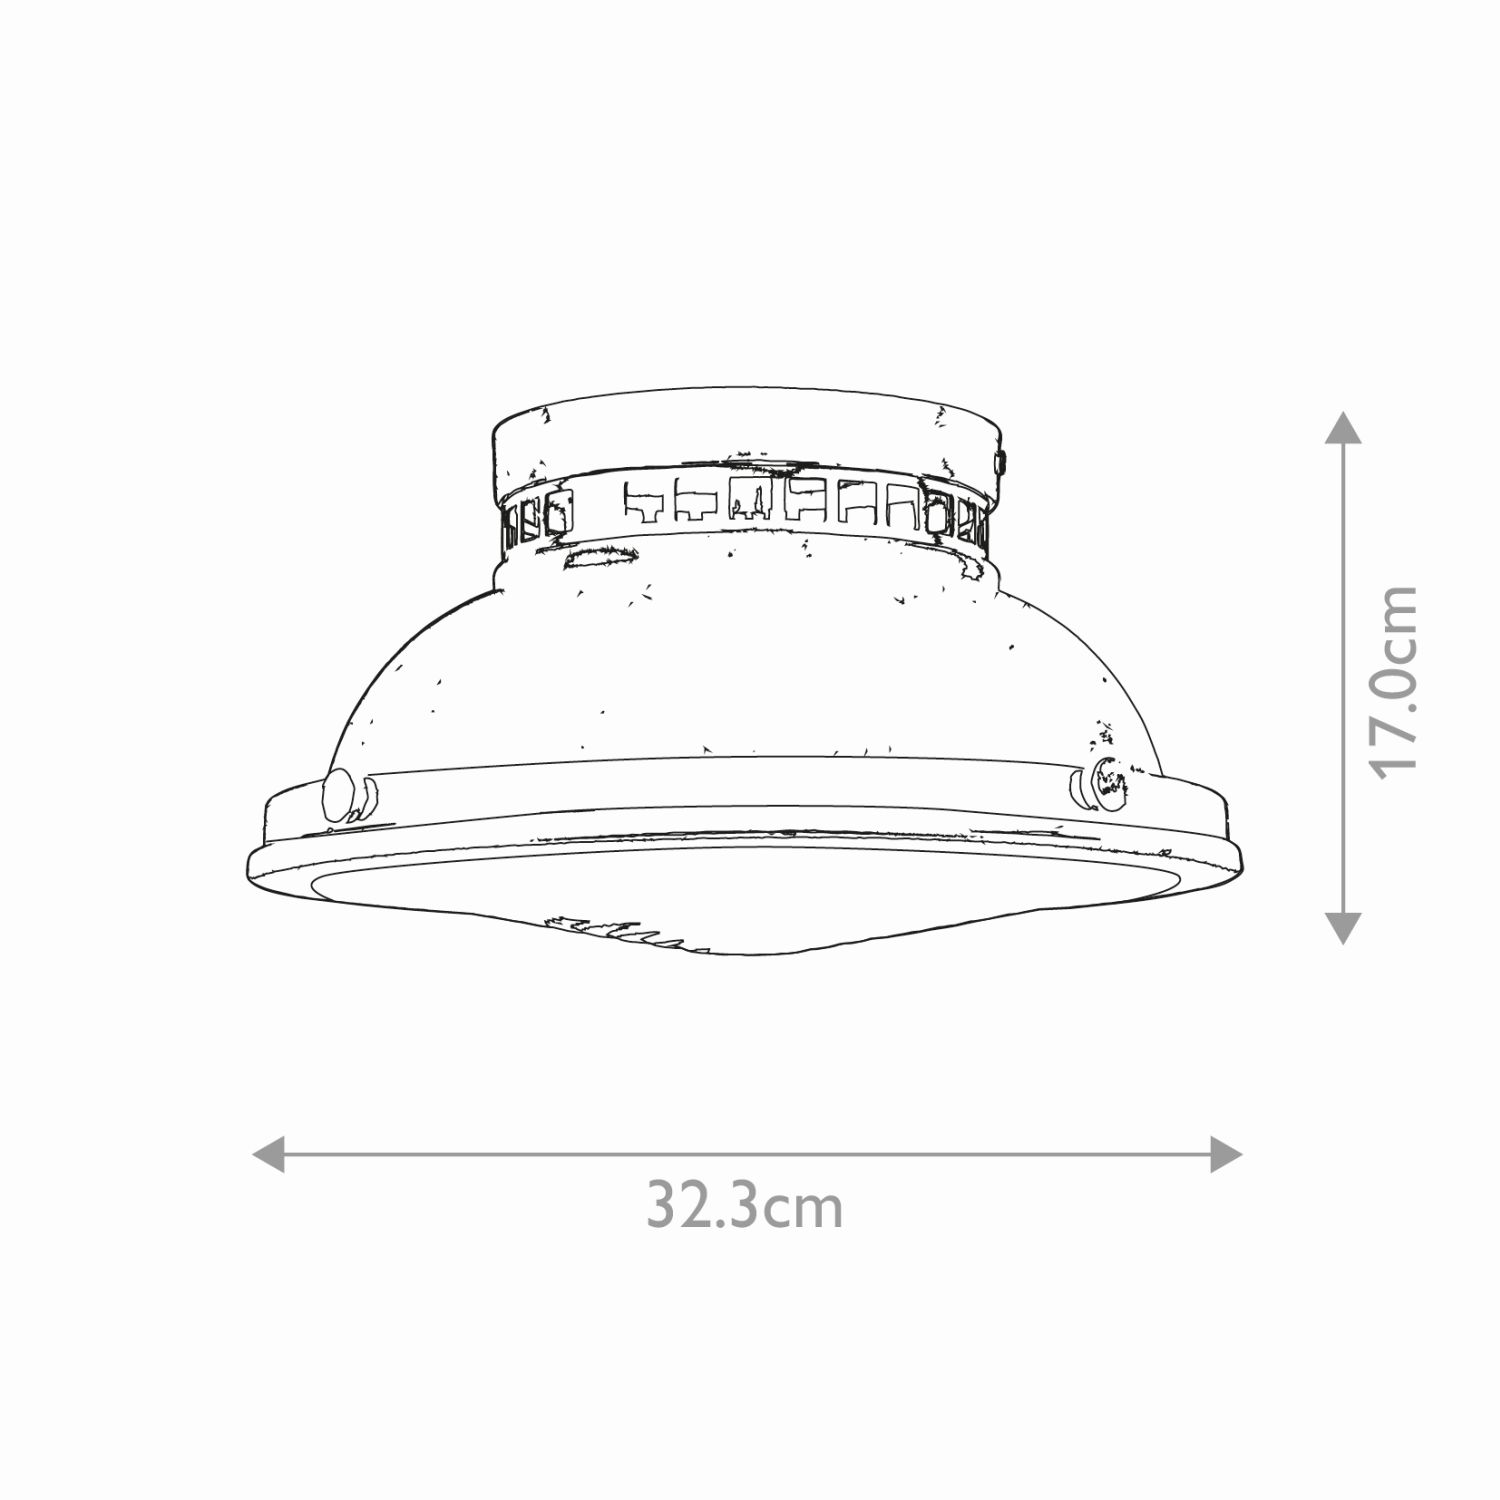 Deckenlampe Messing antik 2x E27 Ø 32 cm Industrial Design